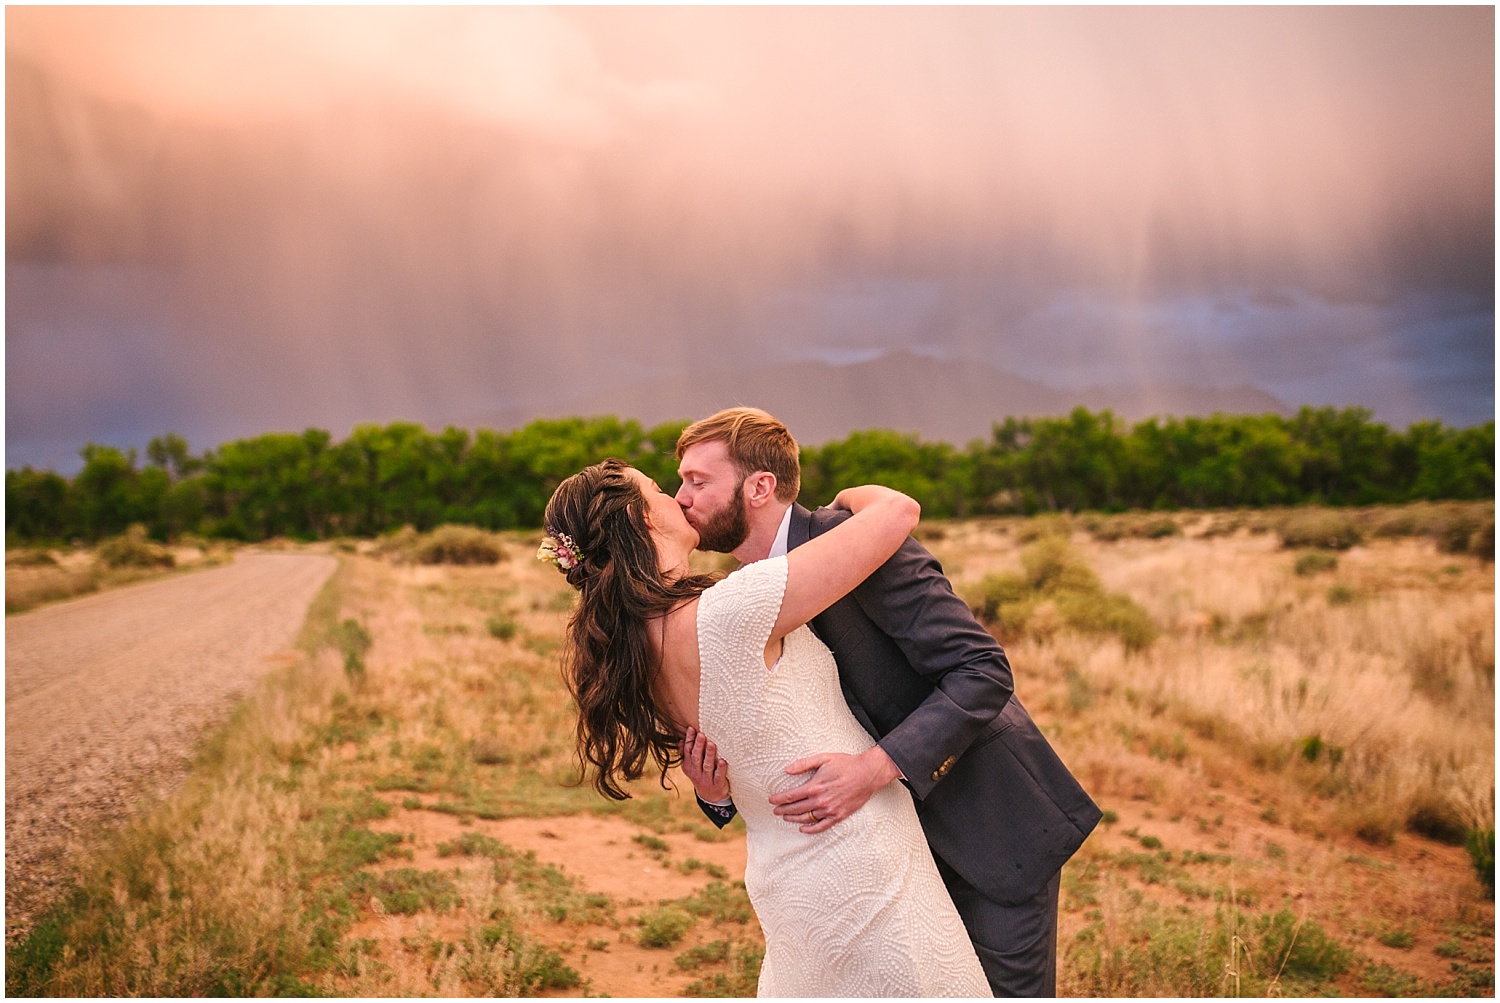 Bride and groom sunset portraits after summer storm at Hyatt Regency Tamaya wedding in New Mexico